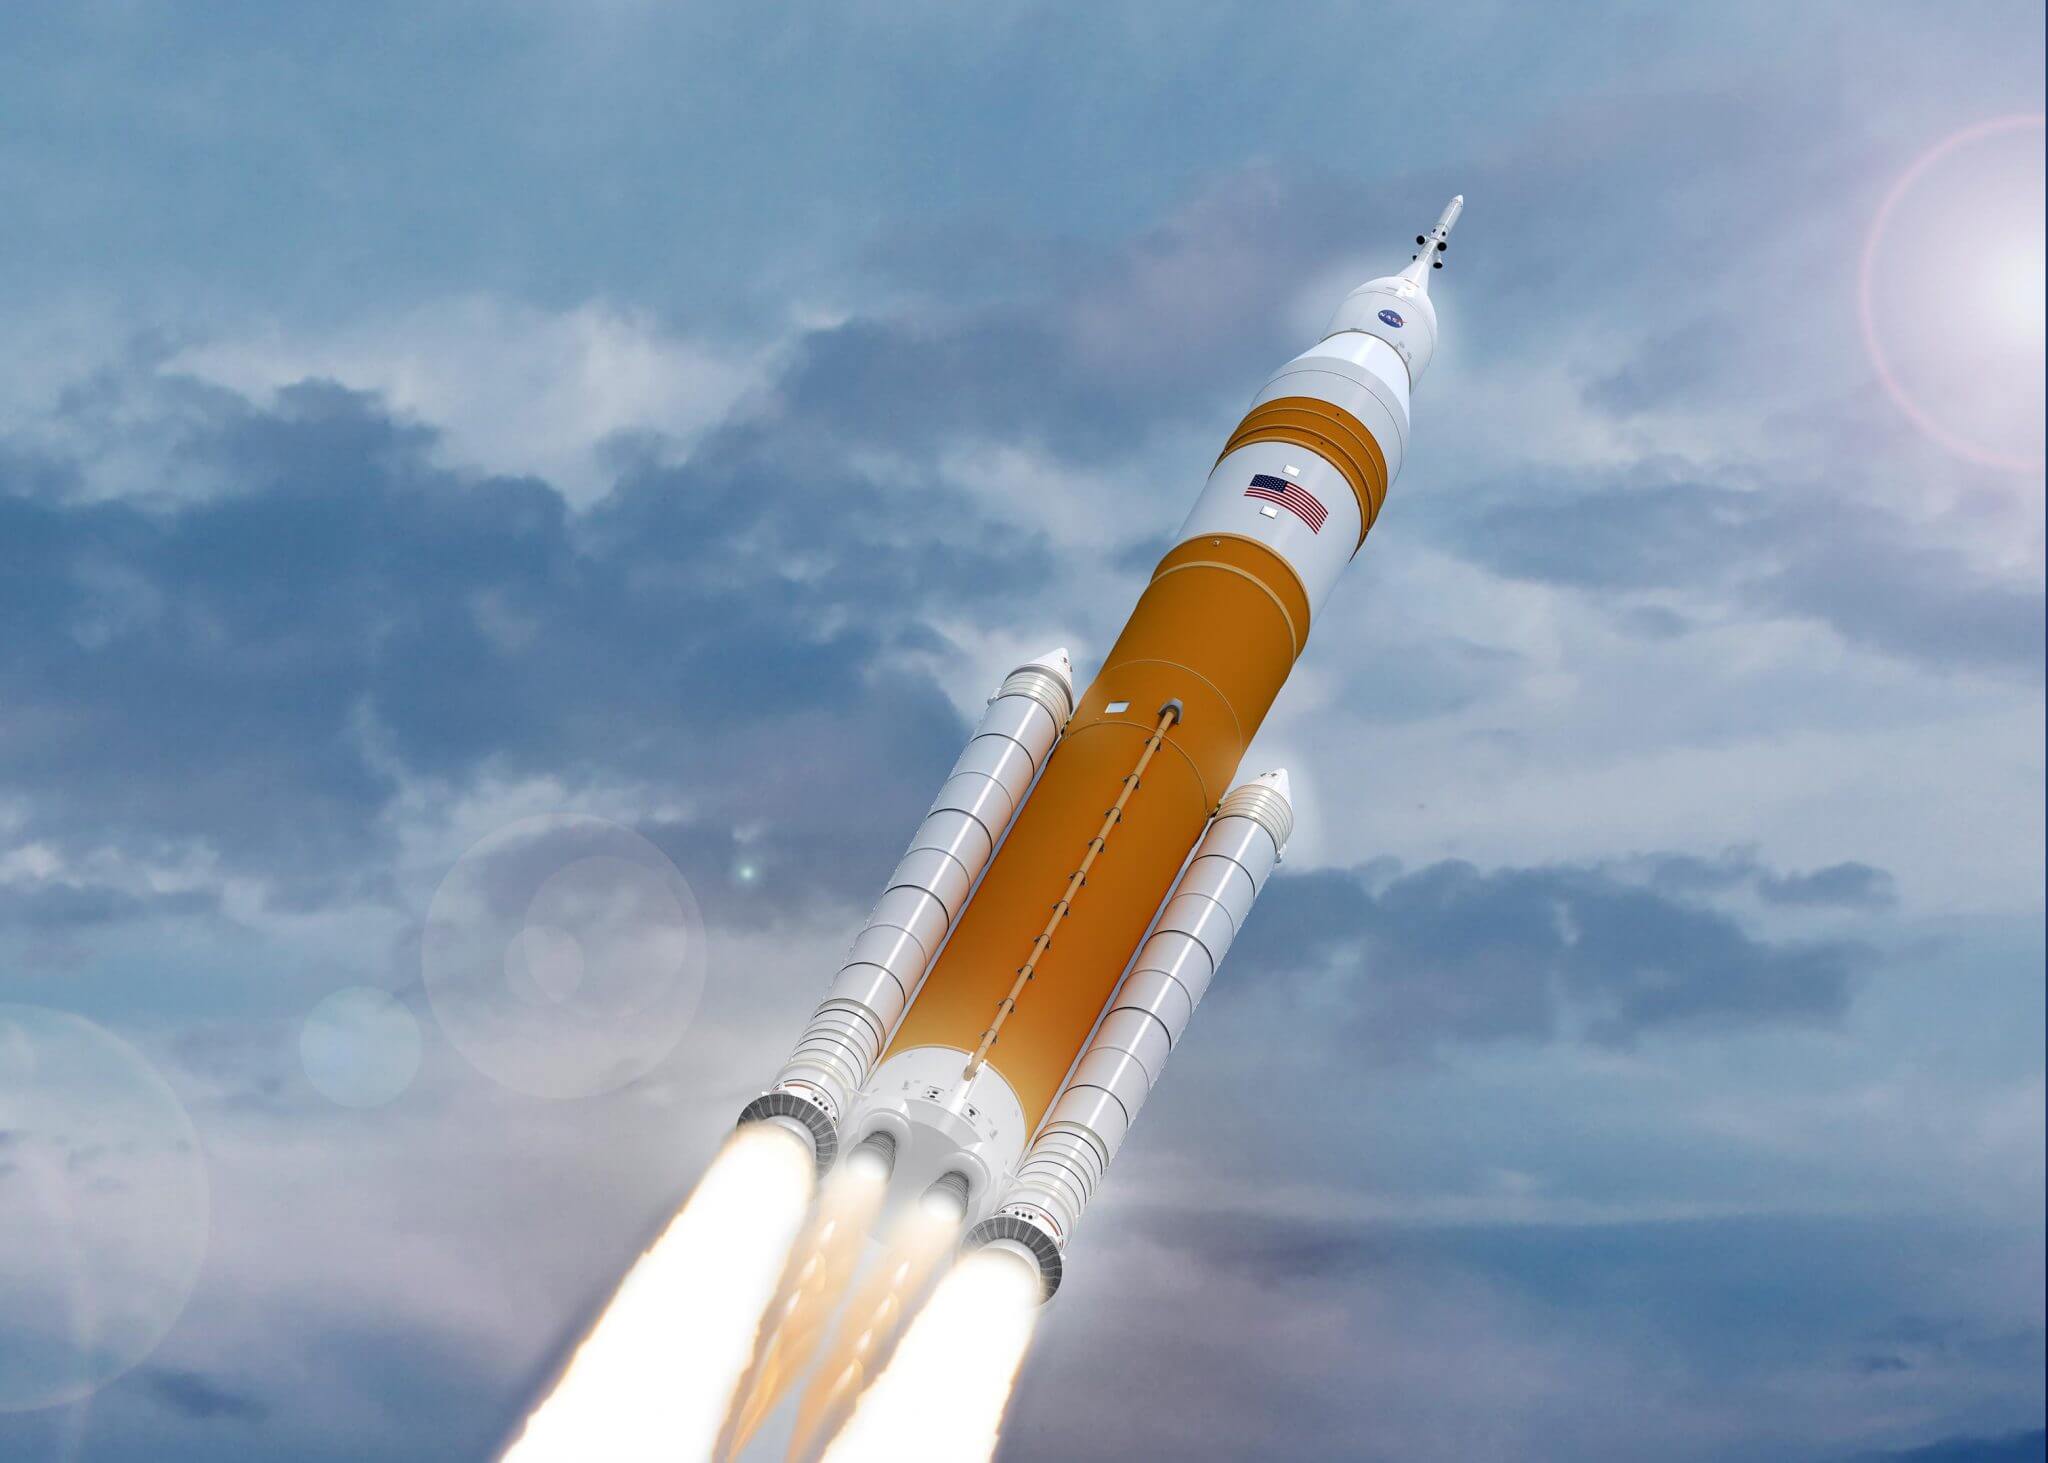 SLS هو صاروخ متطور ثقيل الوزن سيتيح قدرة جديدة تمامًا للعلوم والاستكشاف المأهول خارج مدار الأرض. الائتمان: ناسا